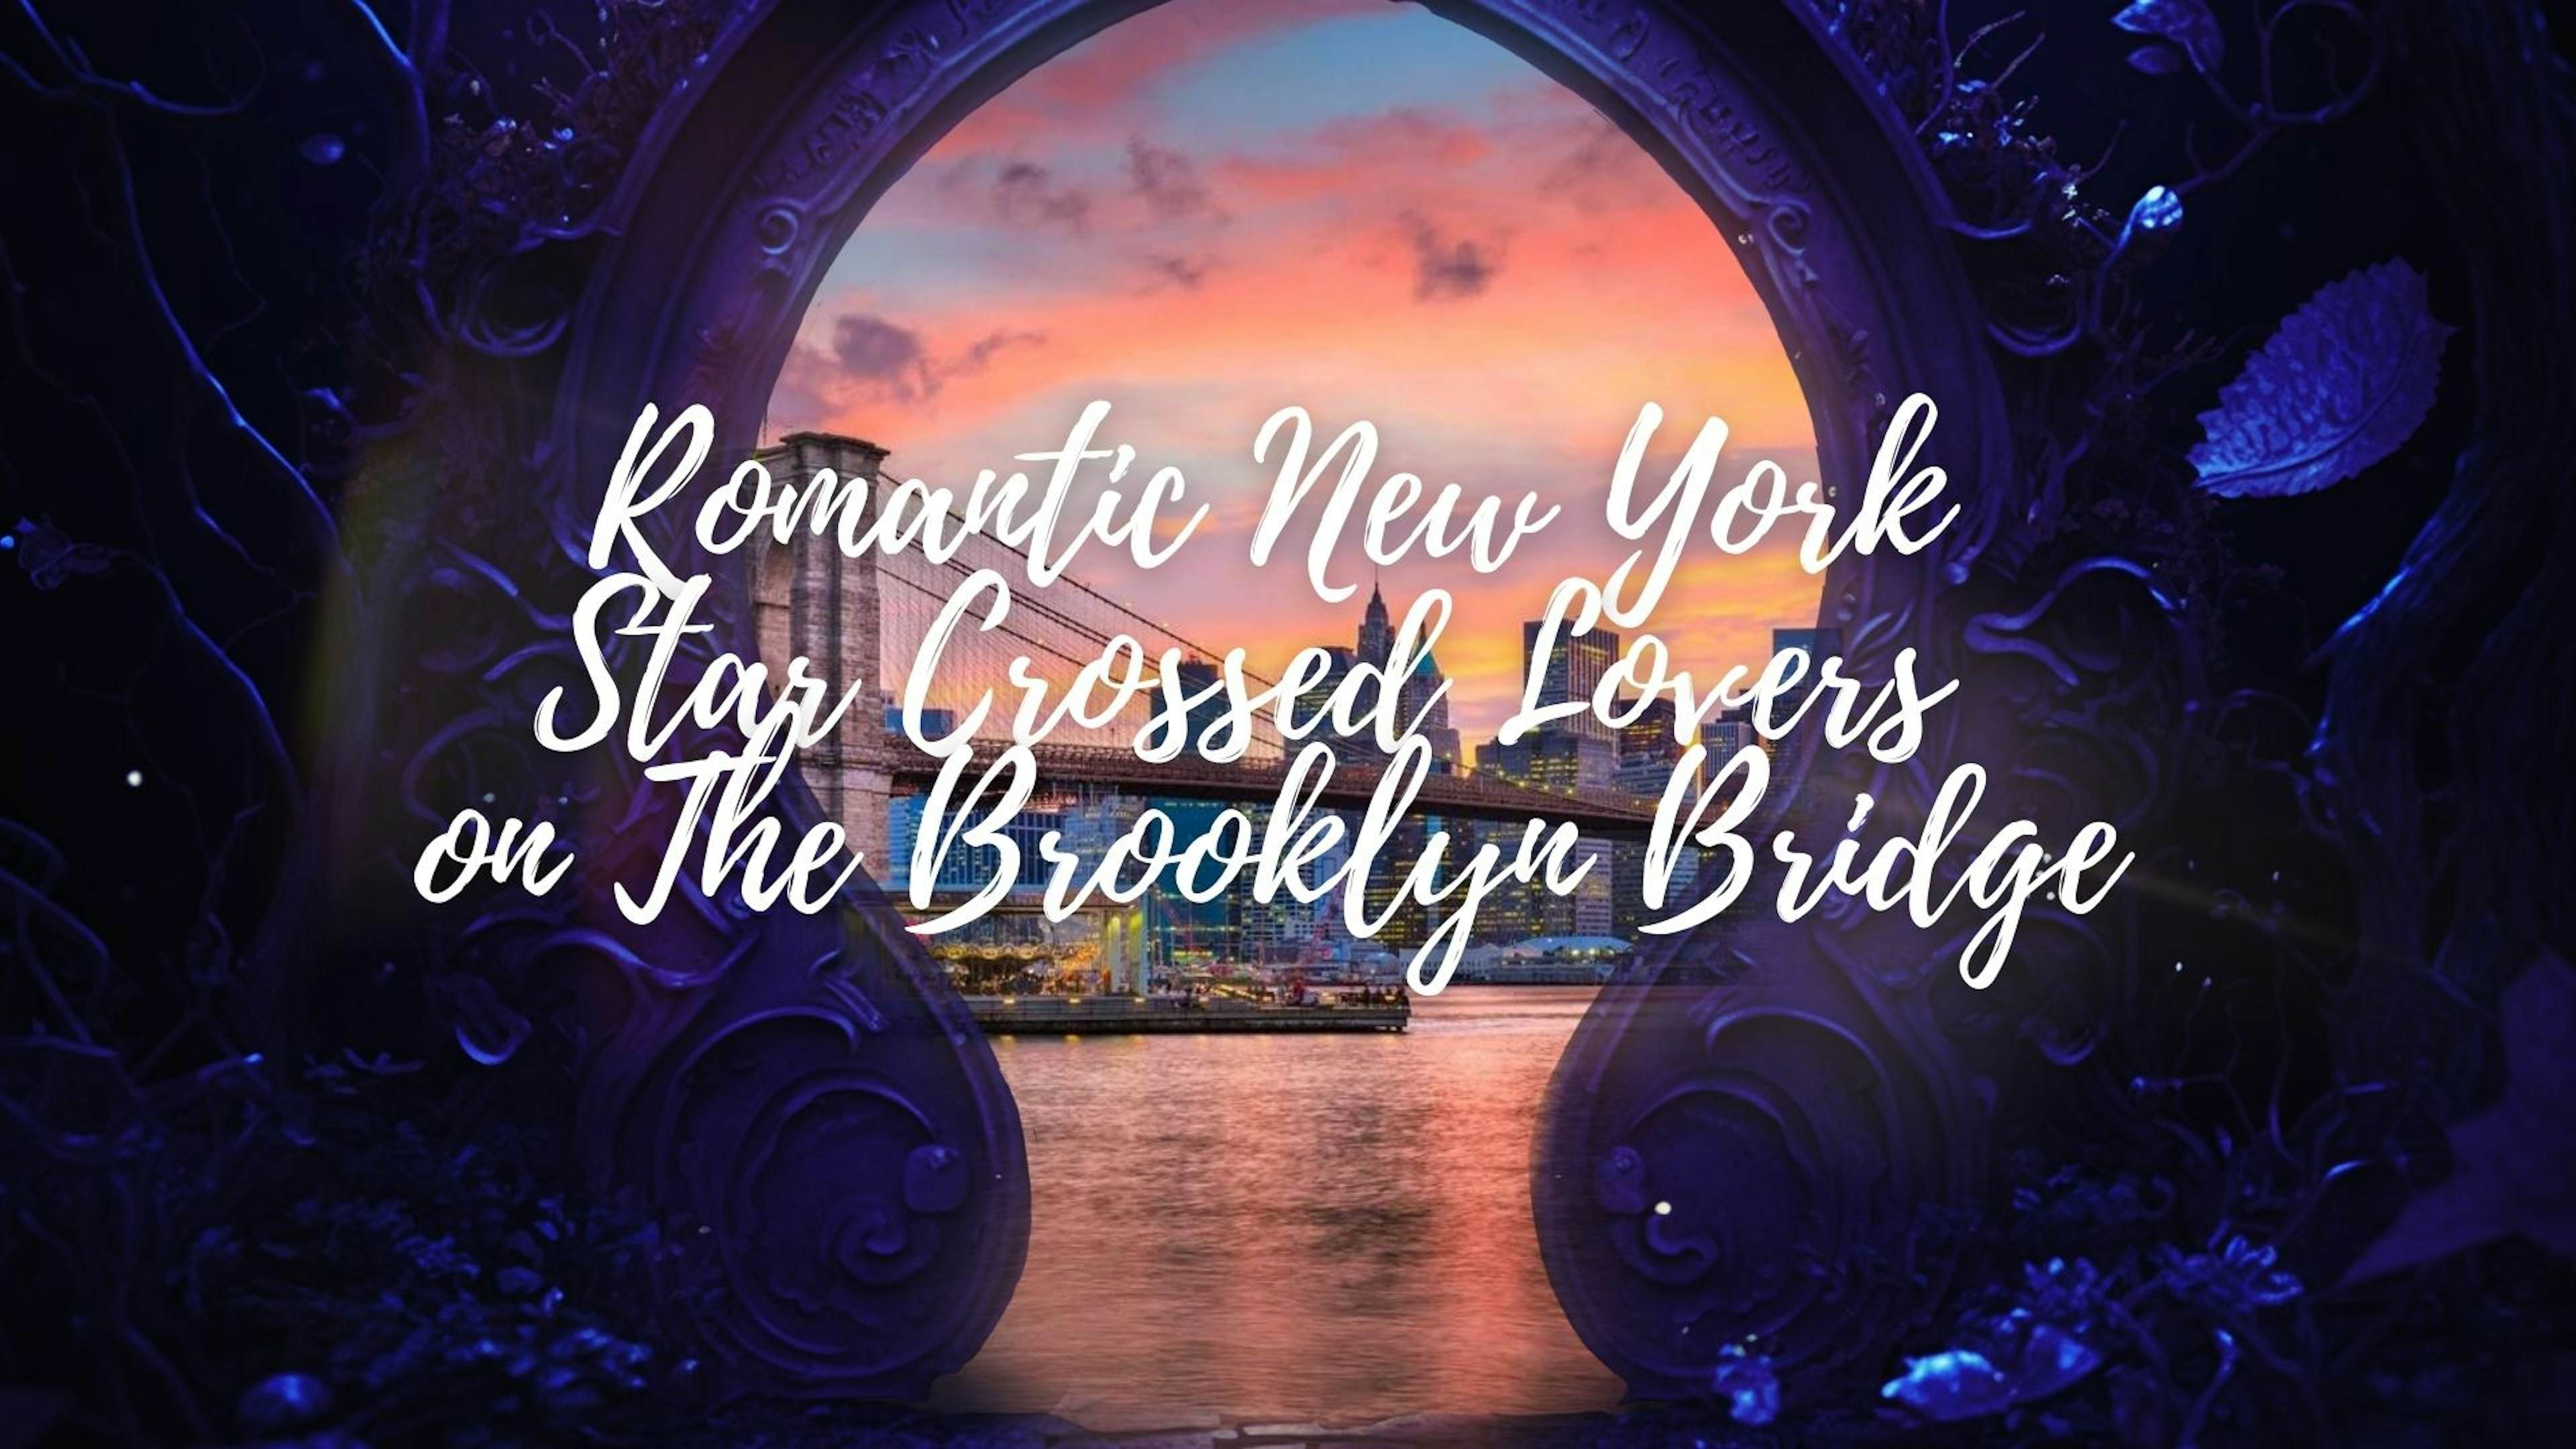 Romantic New York: Star-crossed lovers on the Brooklyn Bridge